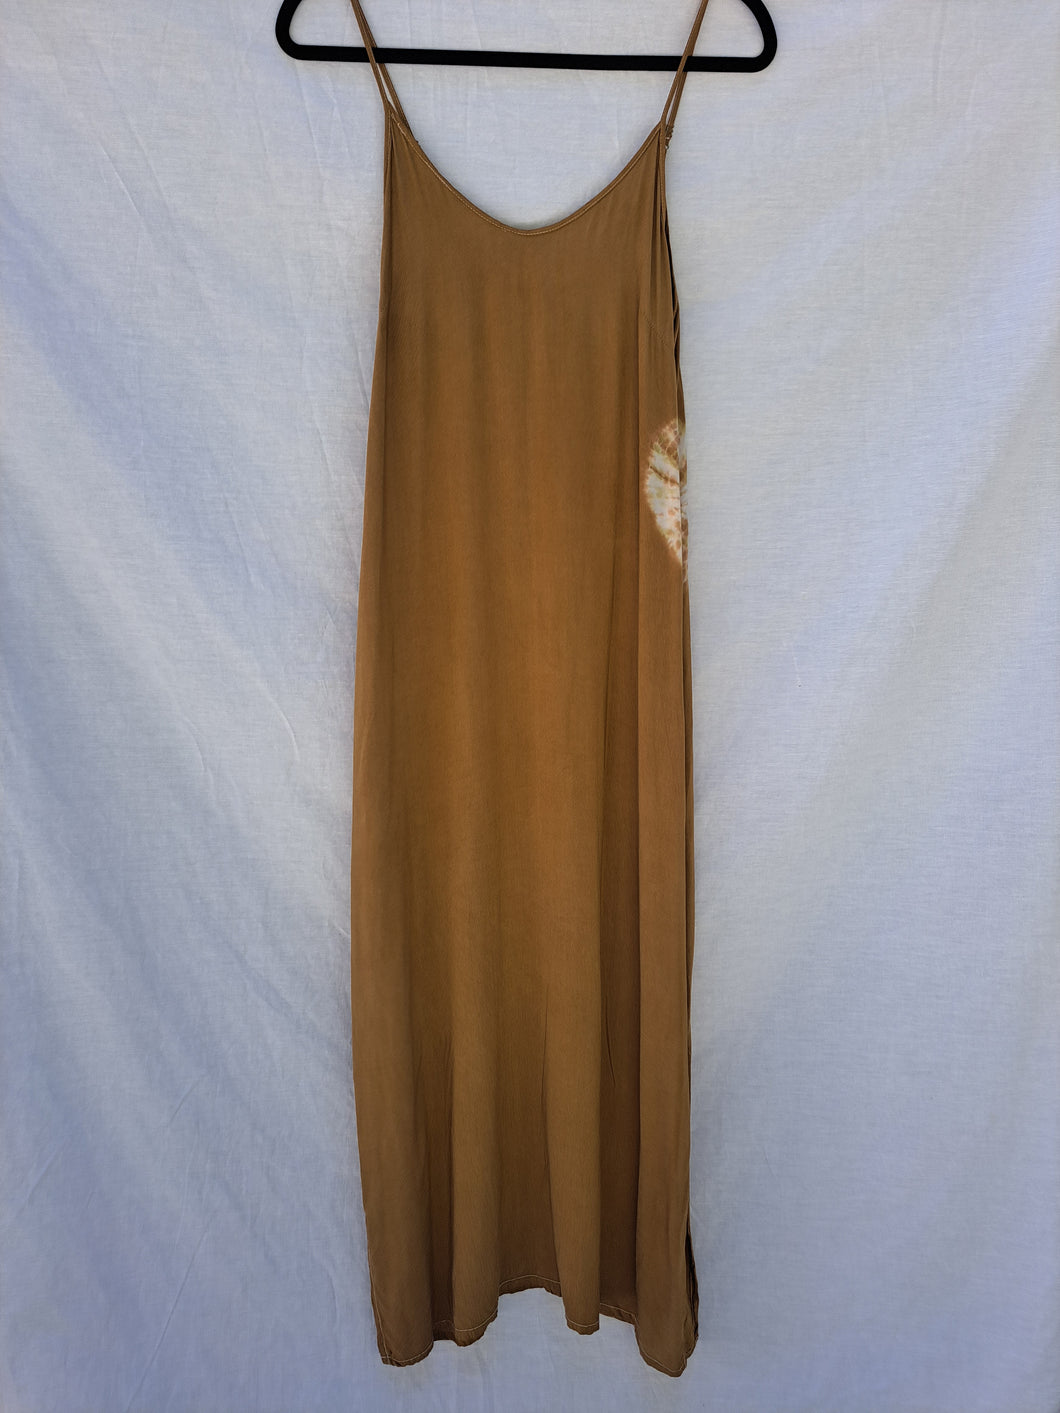 Althea Slip Dress, size XS